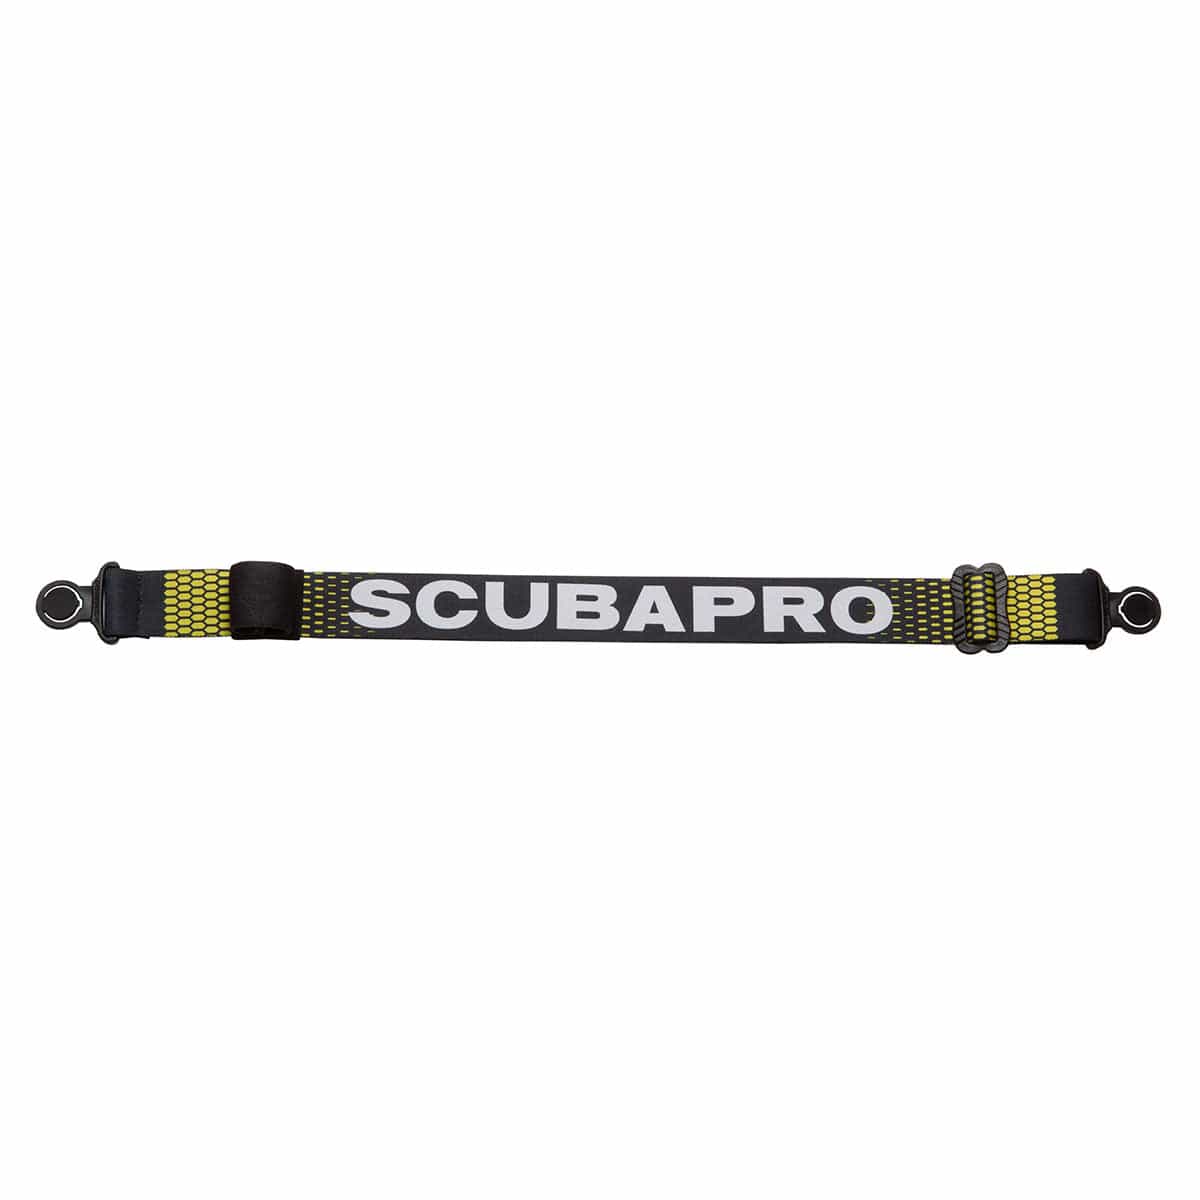 Scubapro Comfort Strap - Black/Yellow - 3